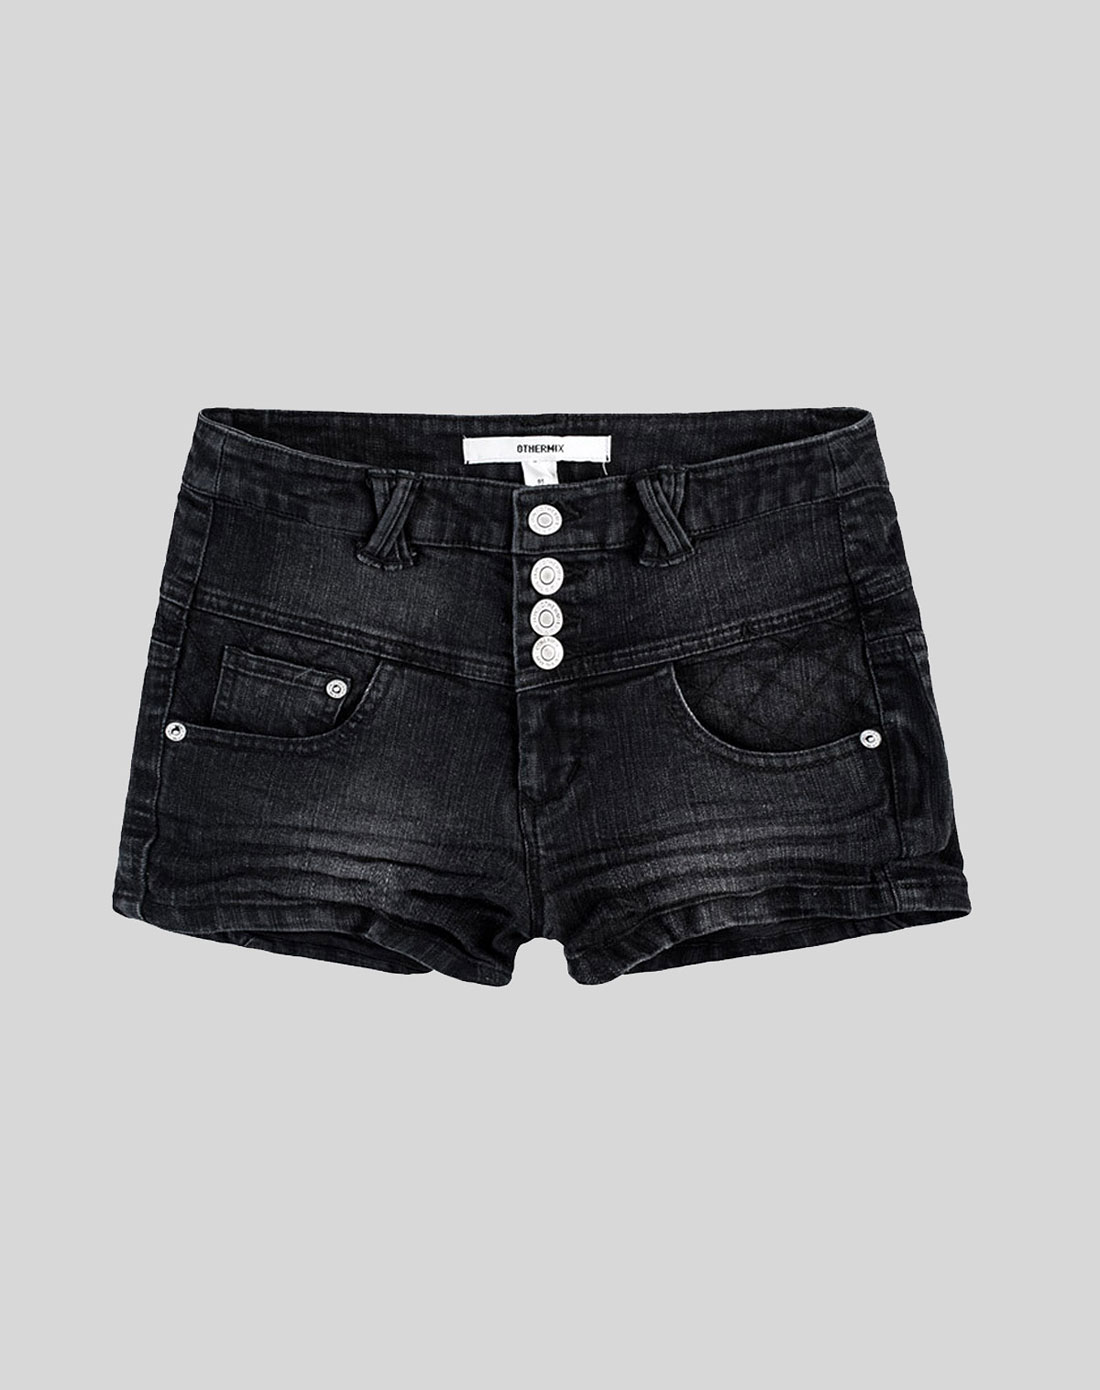 OTHER MIX黑色中高腰牛仔短裤22F110101